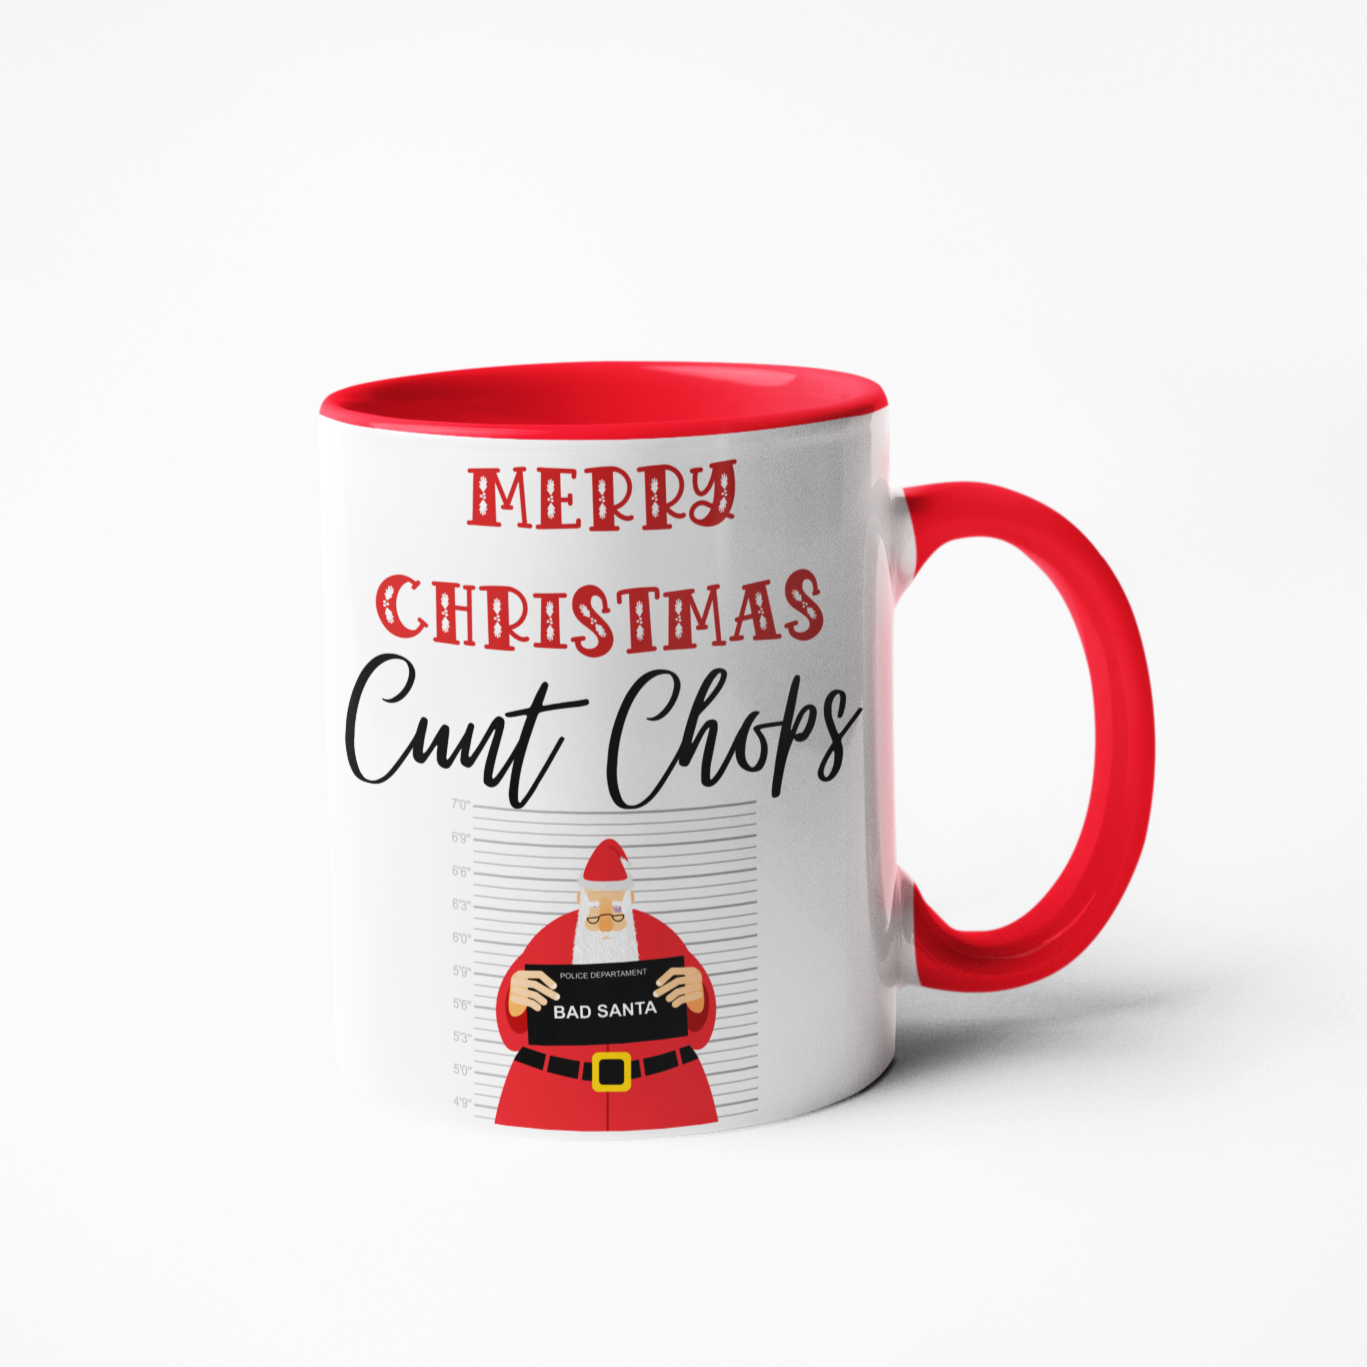 Merry Christmas cunt chops mug red